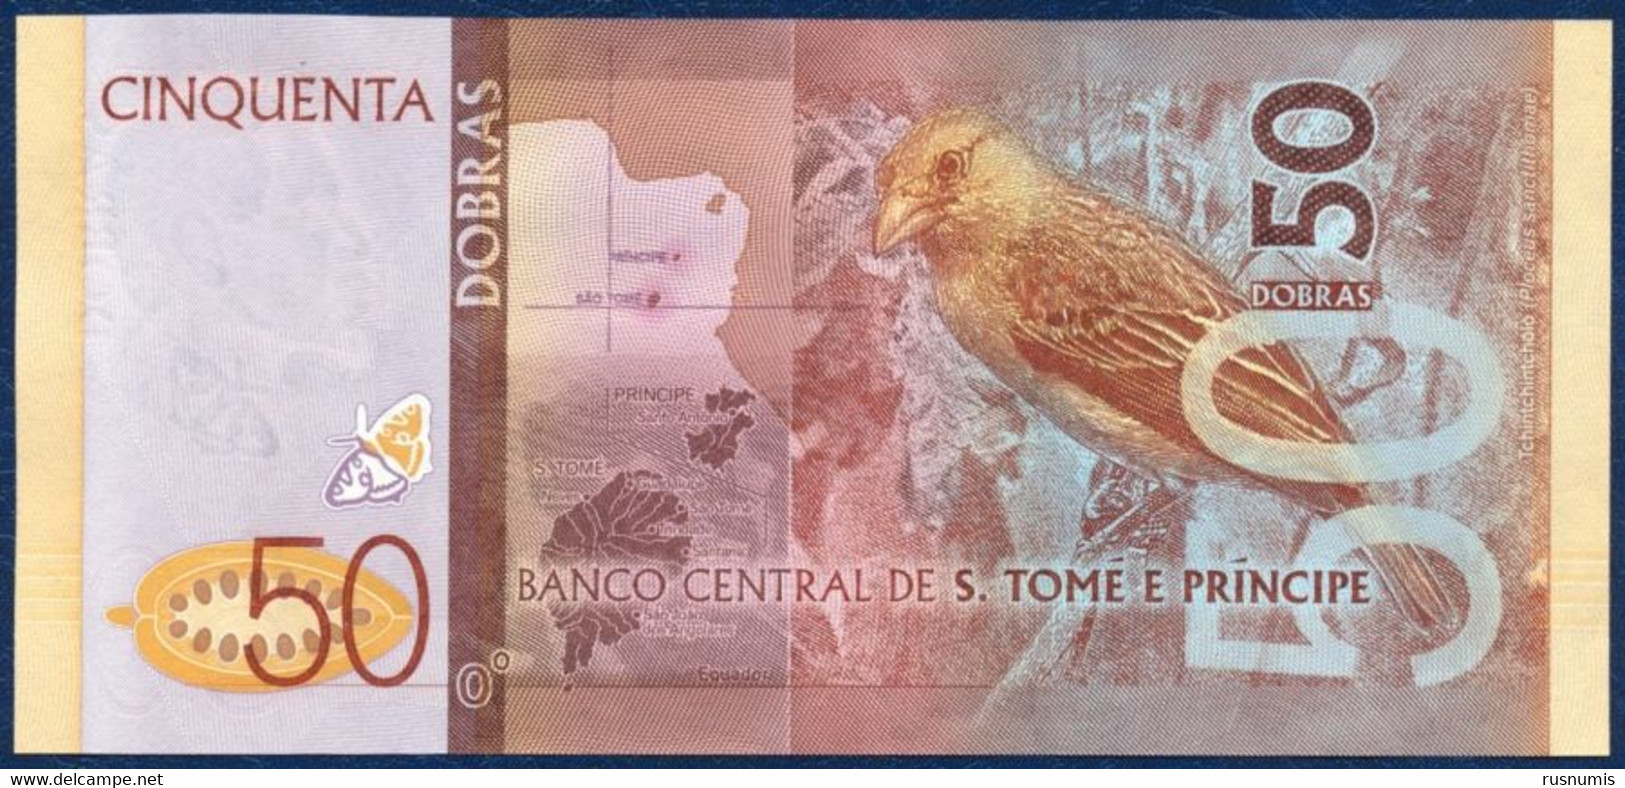 SAN TOME - SAO TOME AND PRINCIPE - ST. THOMAS 50 DOBRAS PICK-73 BUTTERFLY BIRD 2016 UNC - San Tomé Y Príncipe